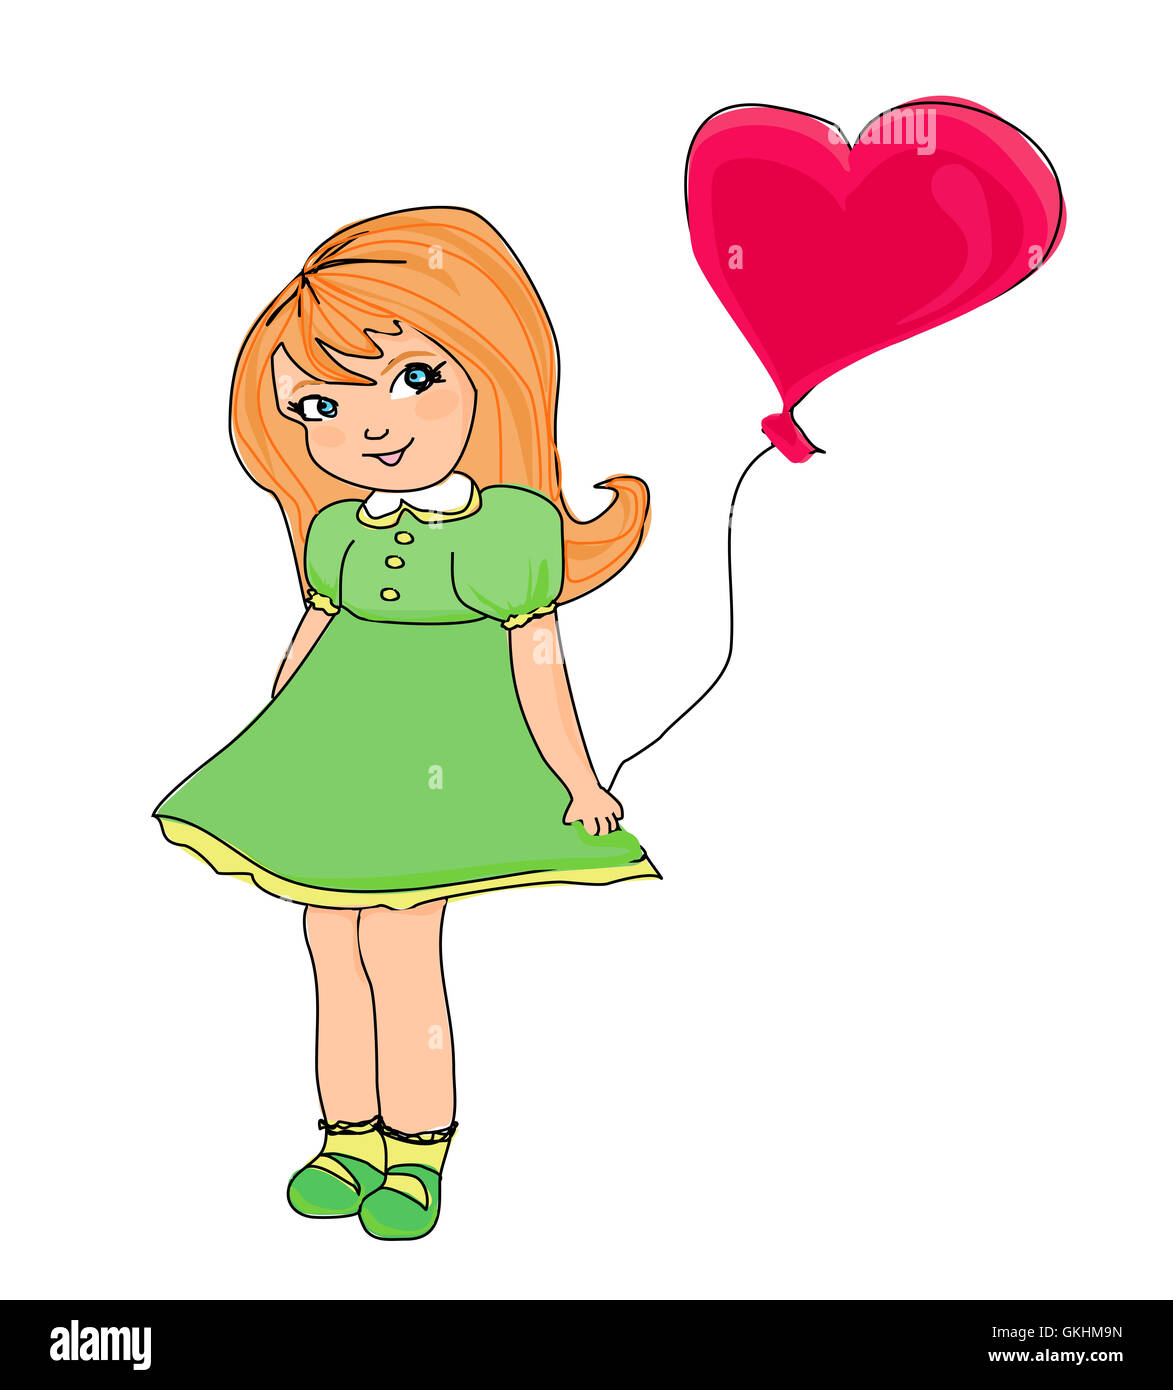 girl with balloon Stock Photo